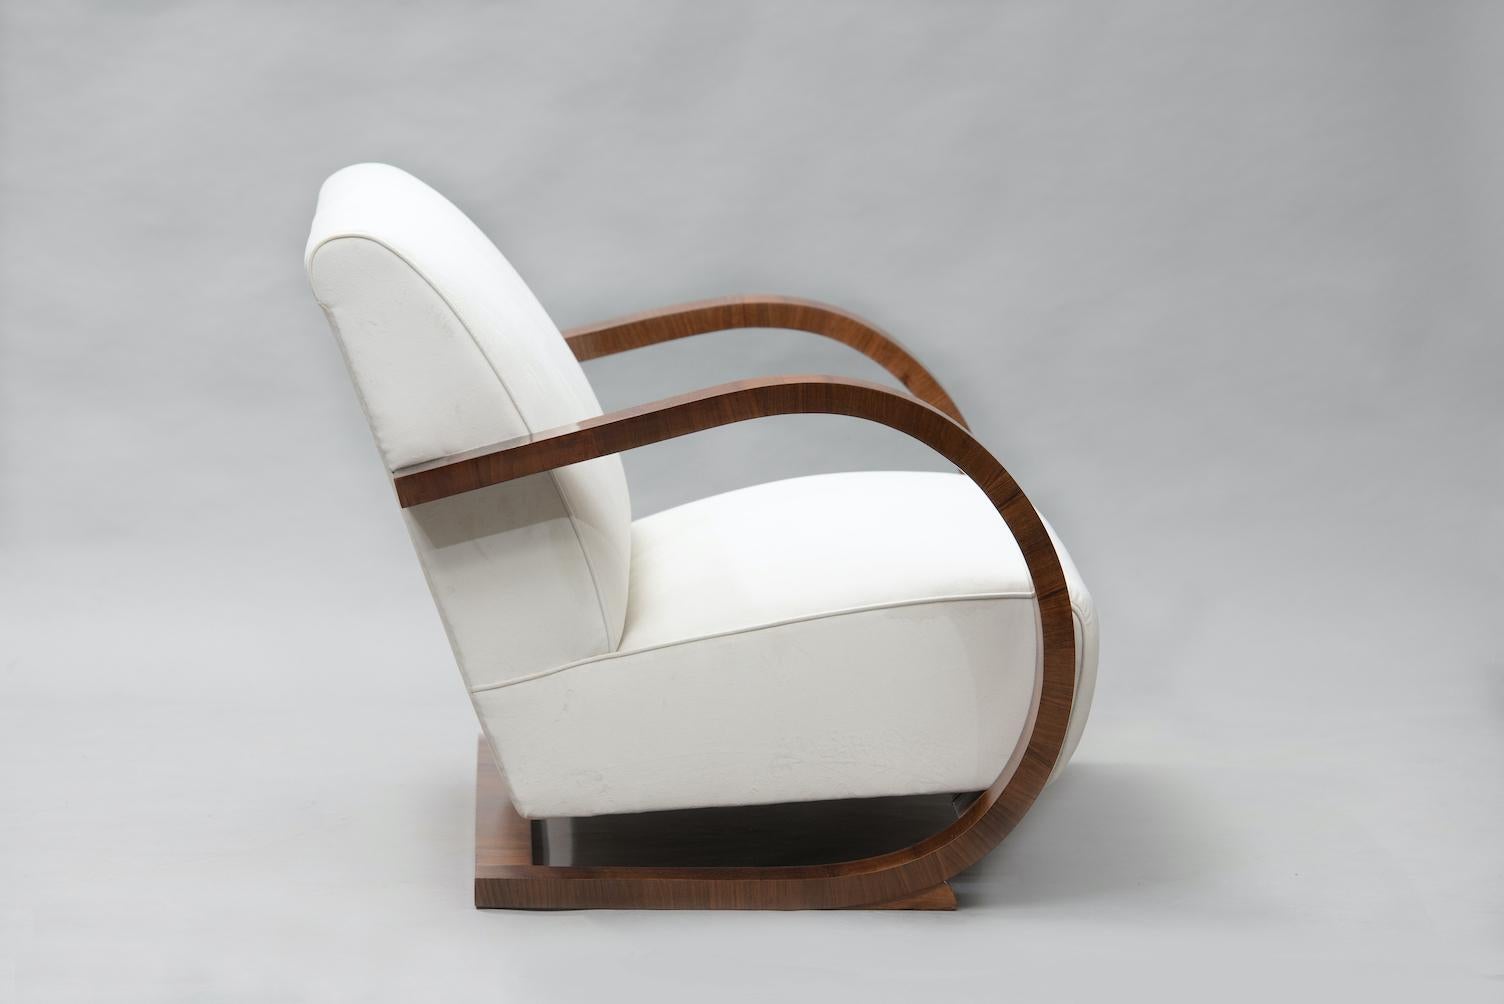 Walnut veneer Art Deco two-seater sofa, reupholstered in ivory velvety fabric.
  